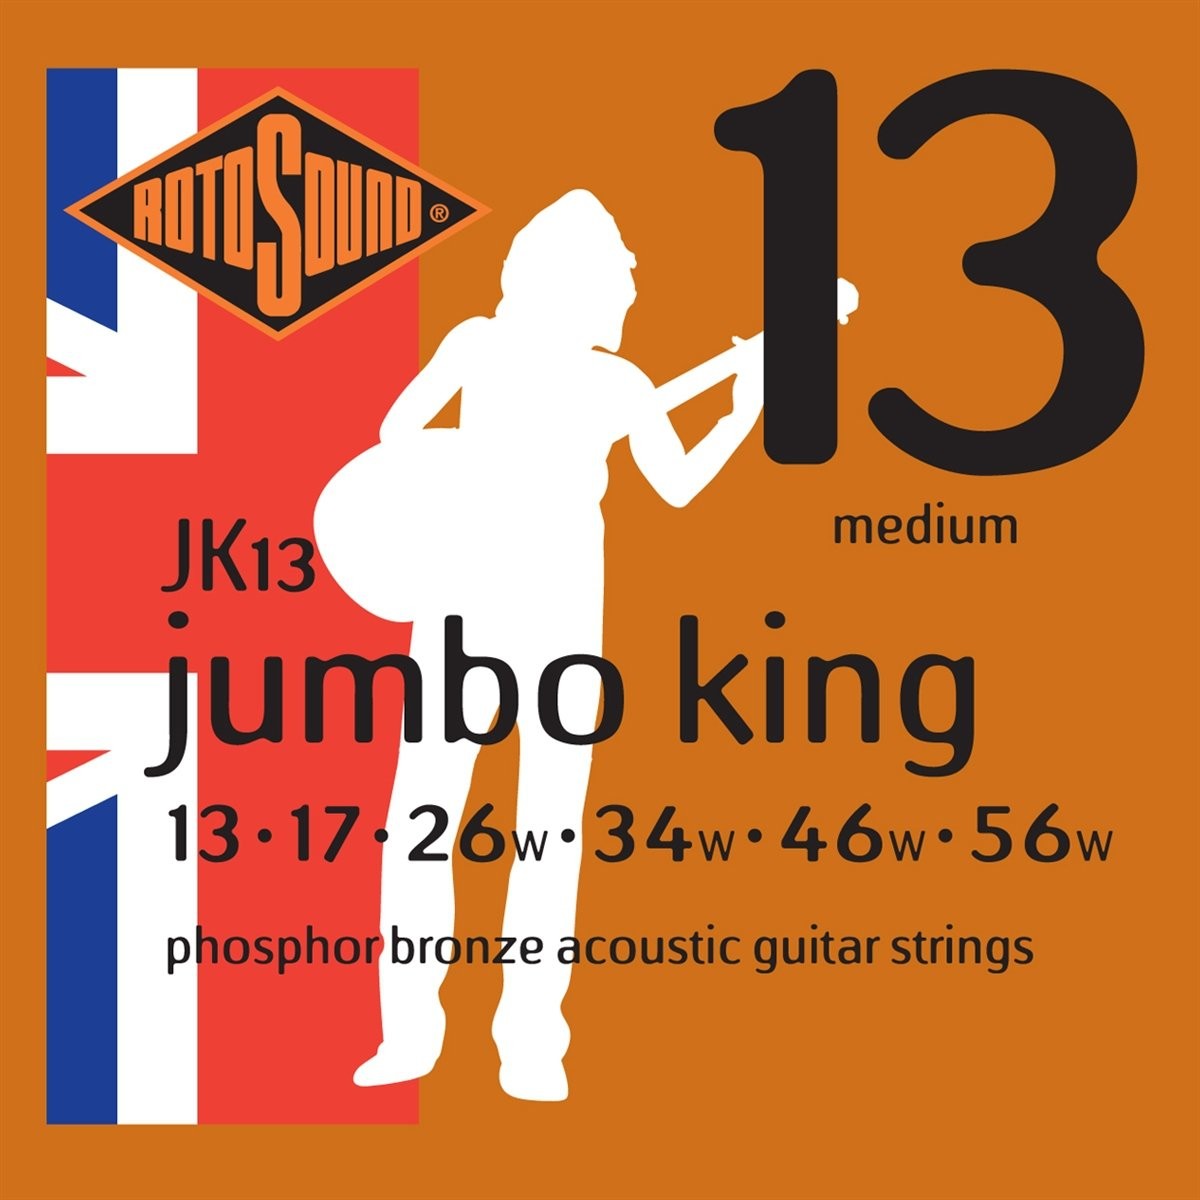 Rotosound rotos górne Jumbo King Acoustic Guitar Strings JK13